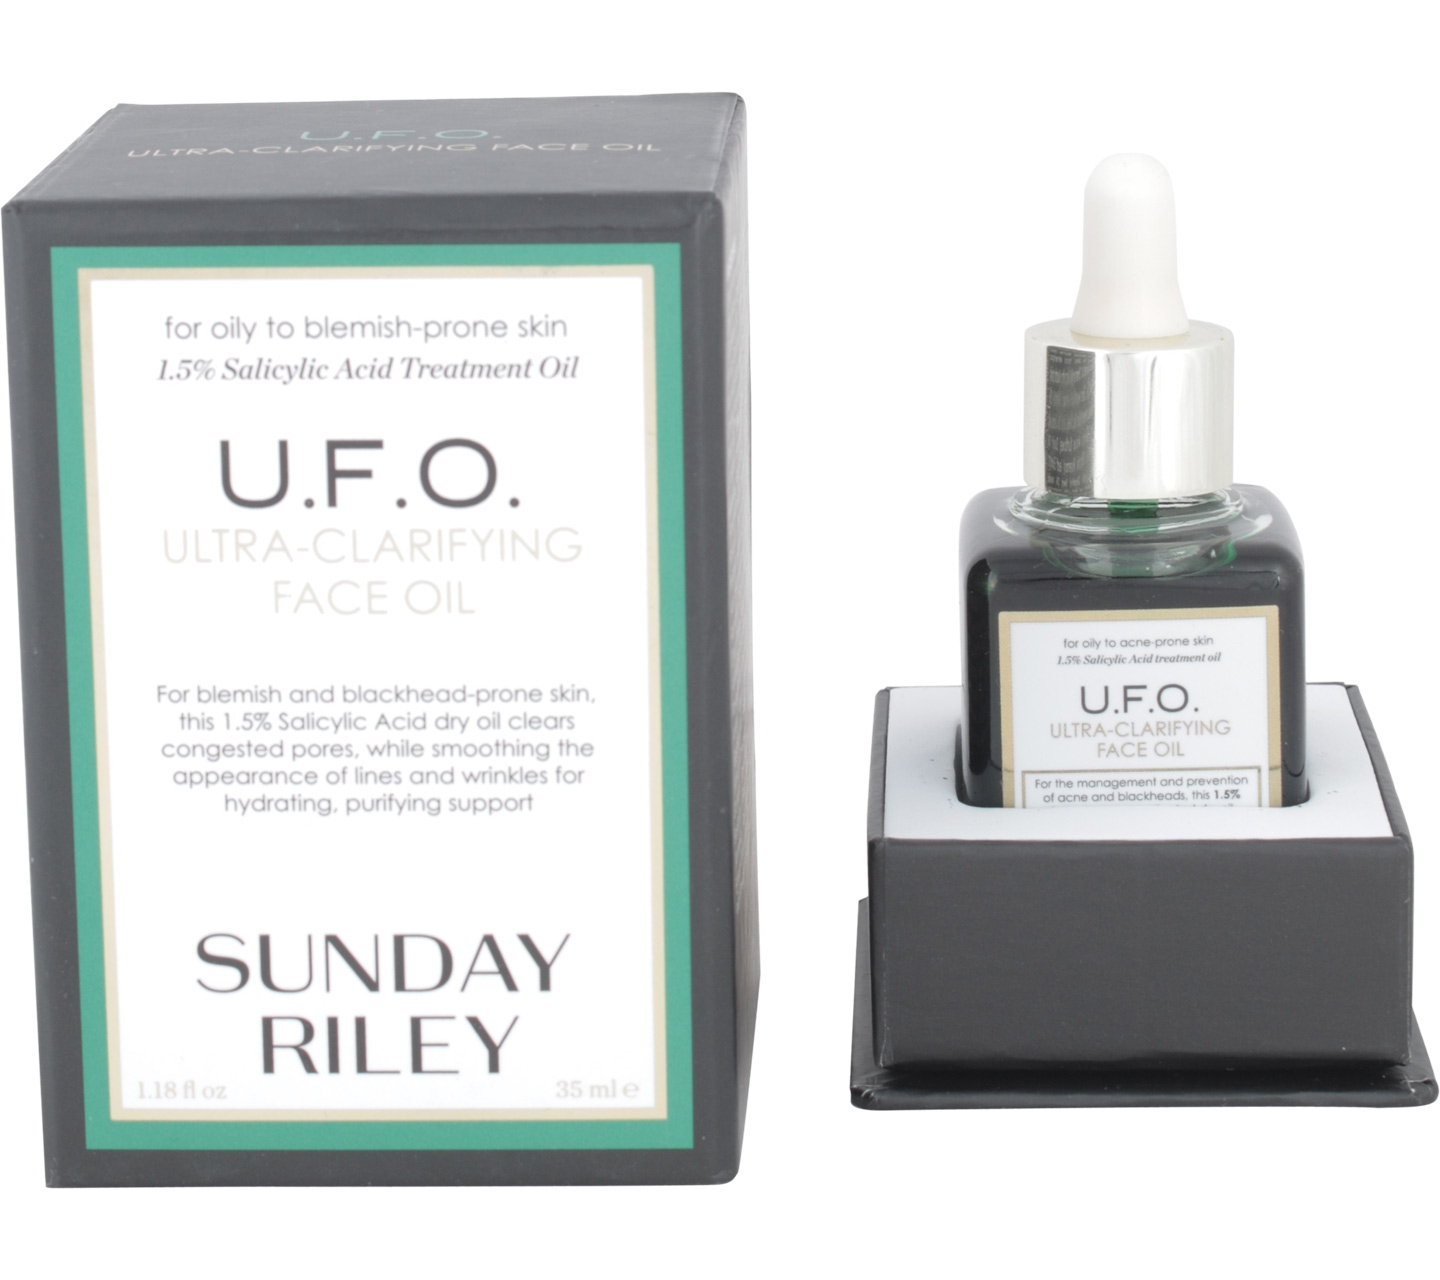 Sunday Riley U.F.O. Ultra-Clarifying Face Oil Skin Care